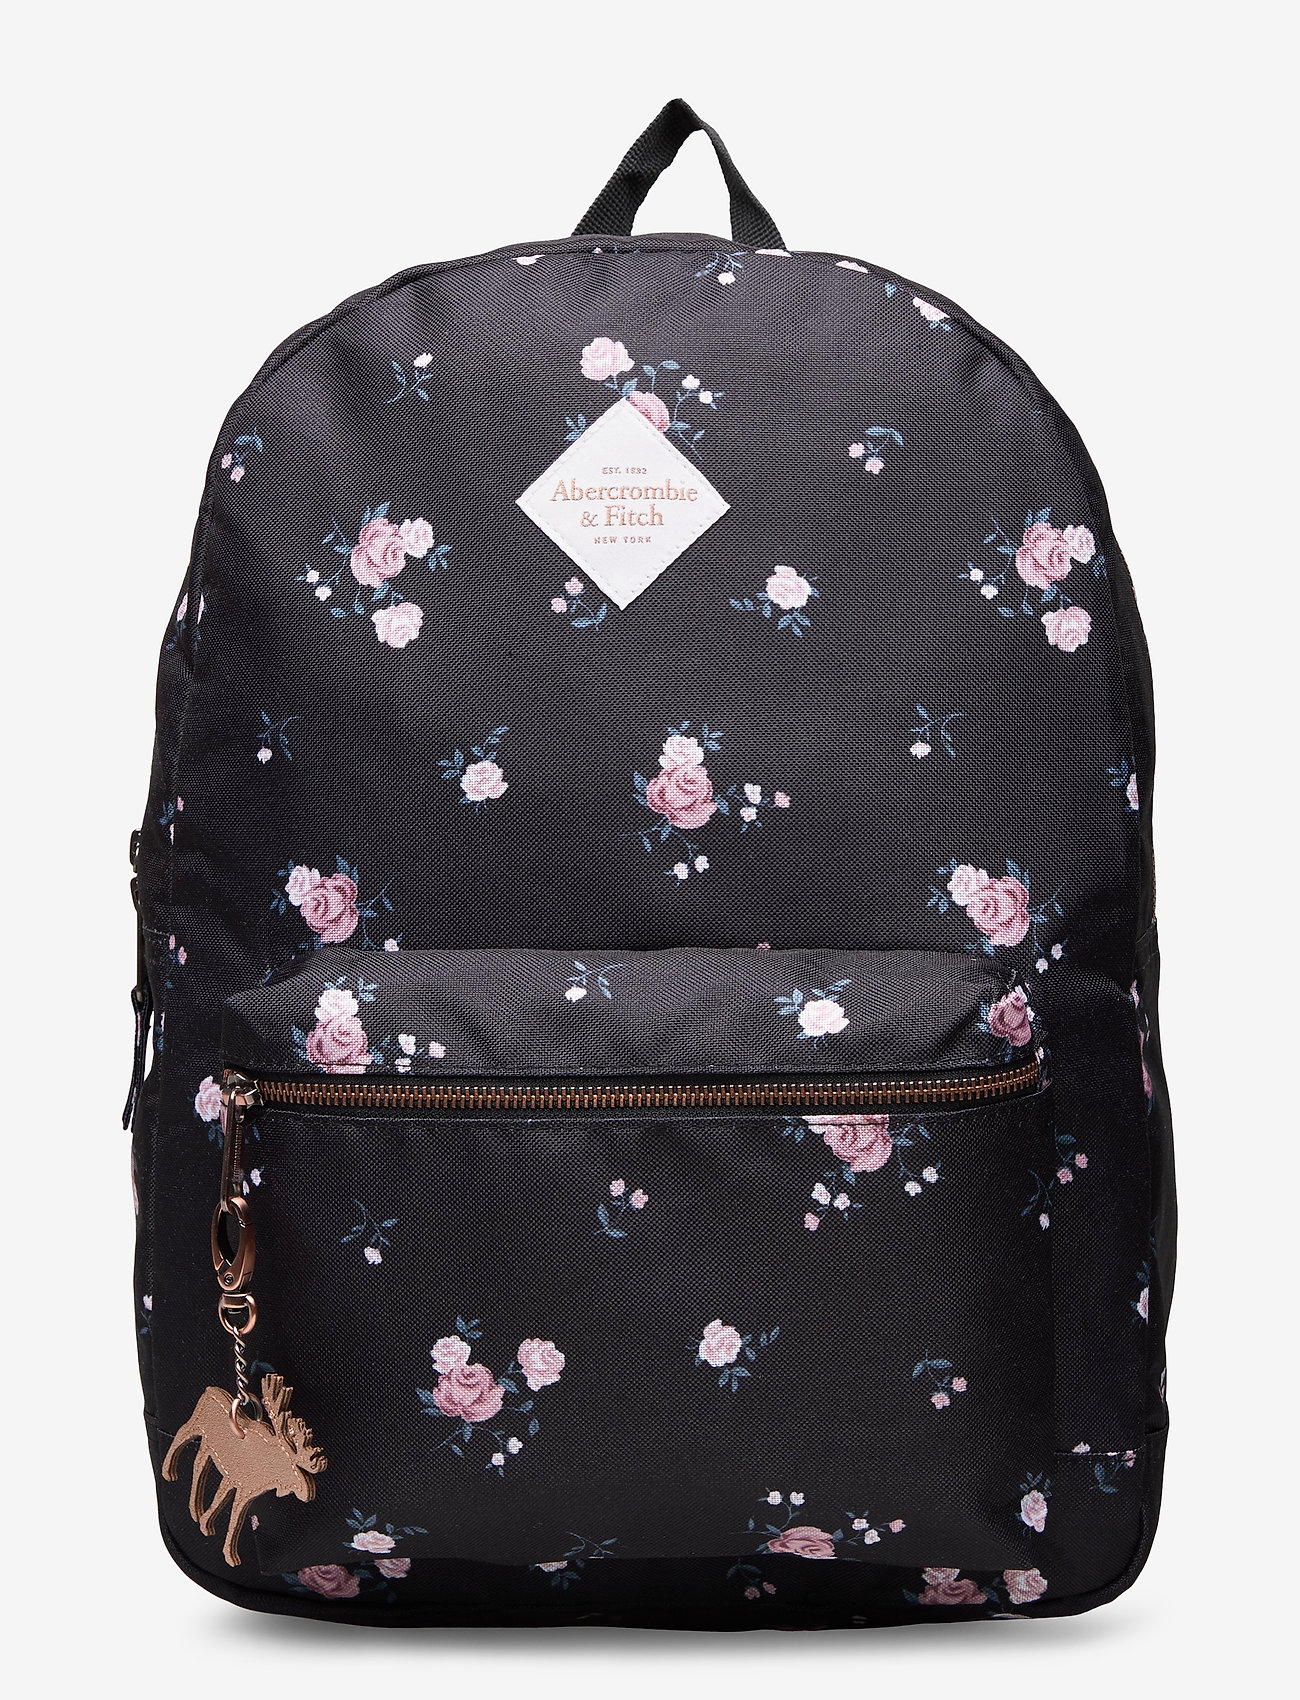 abercrombie kids backpack